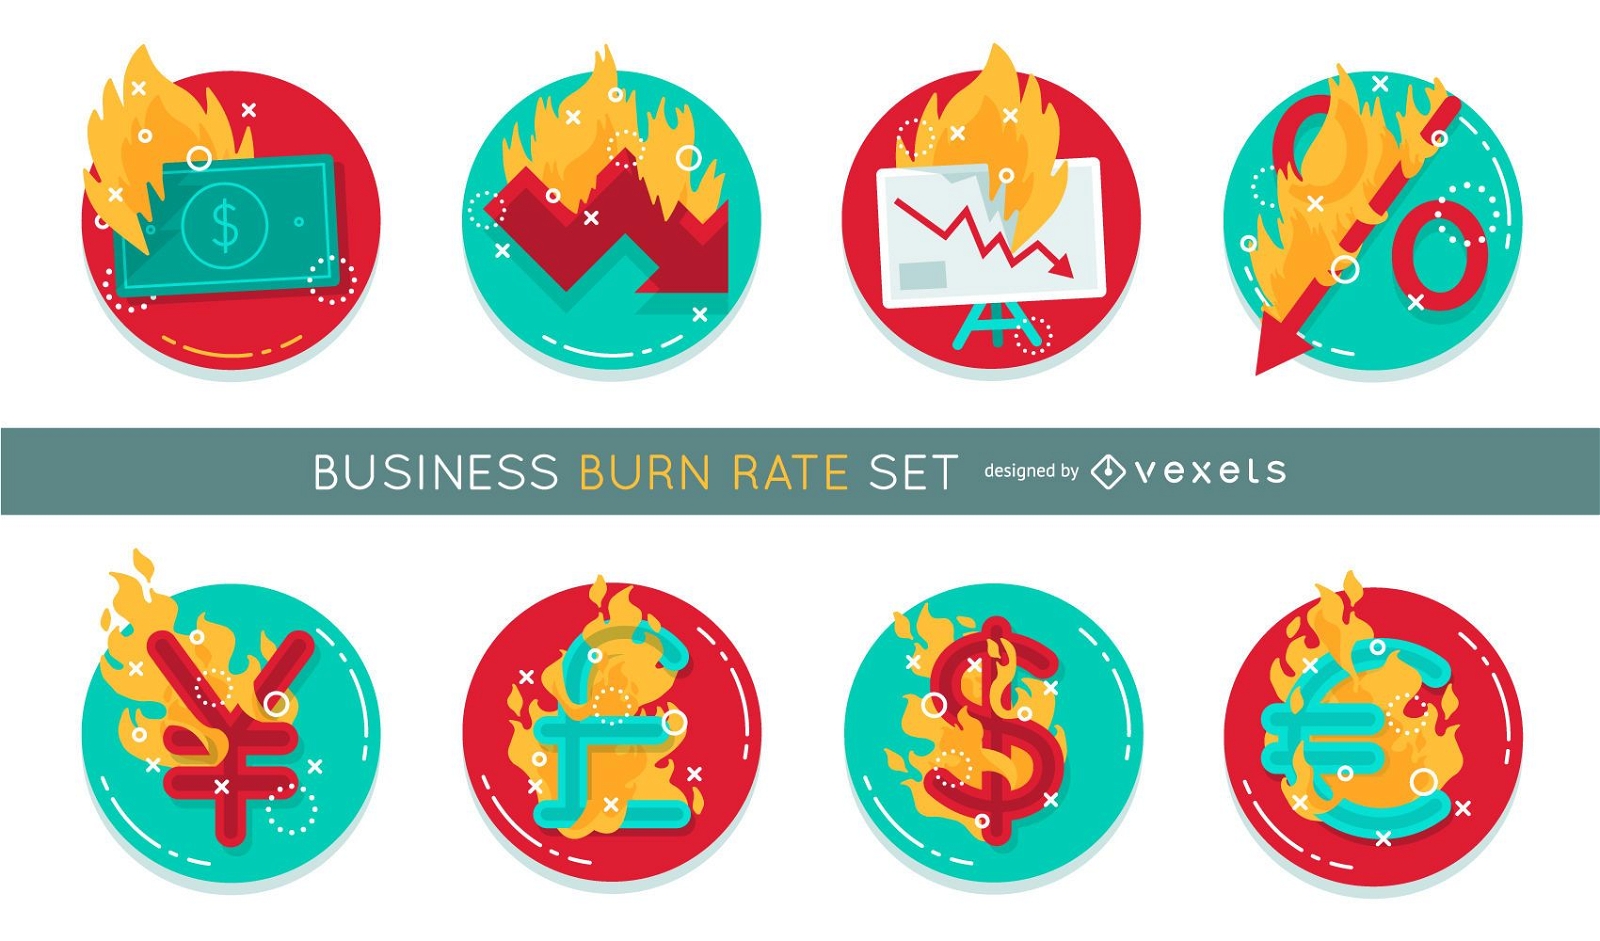 Business burn rate set